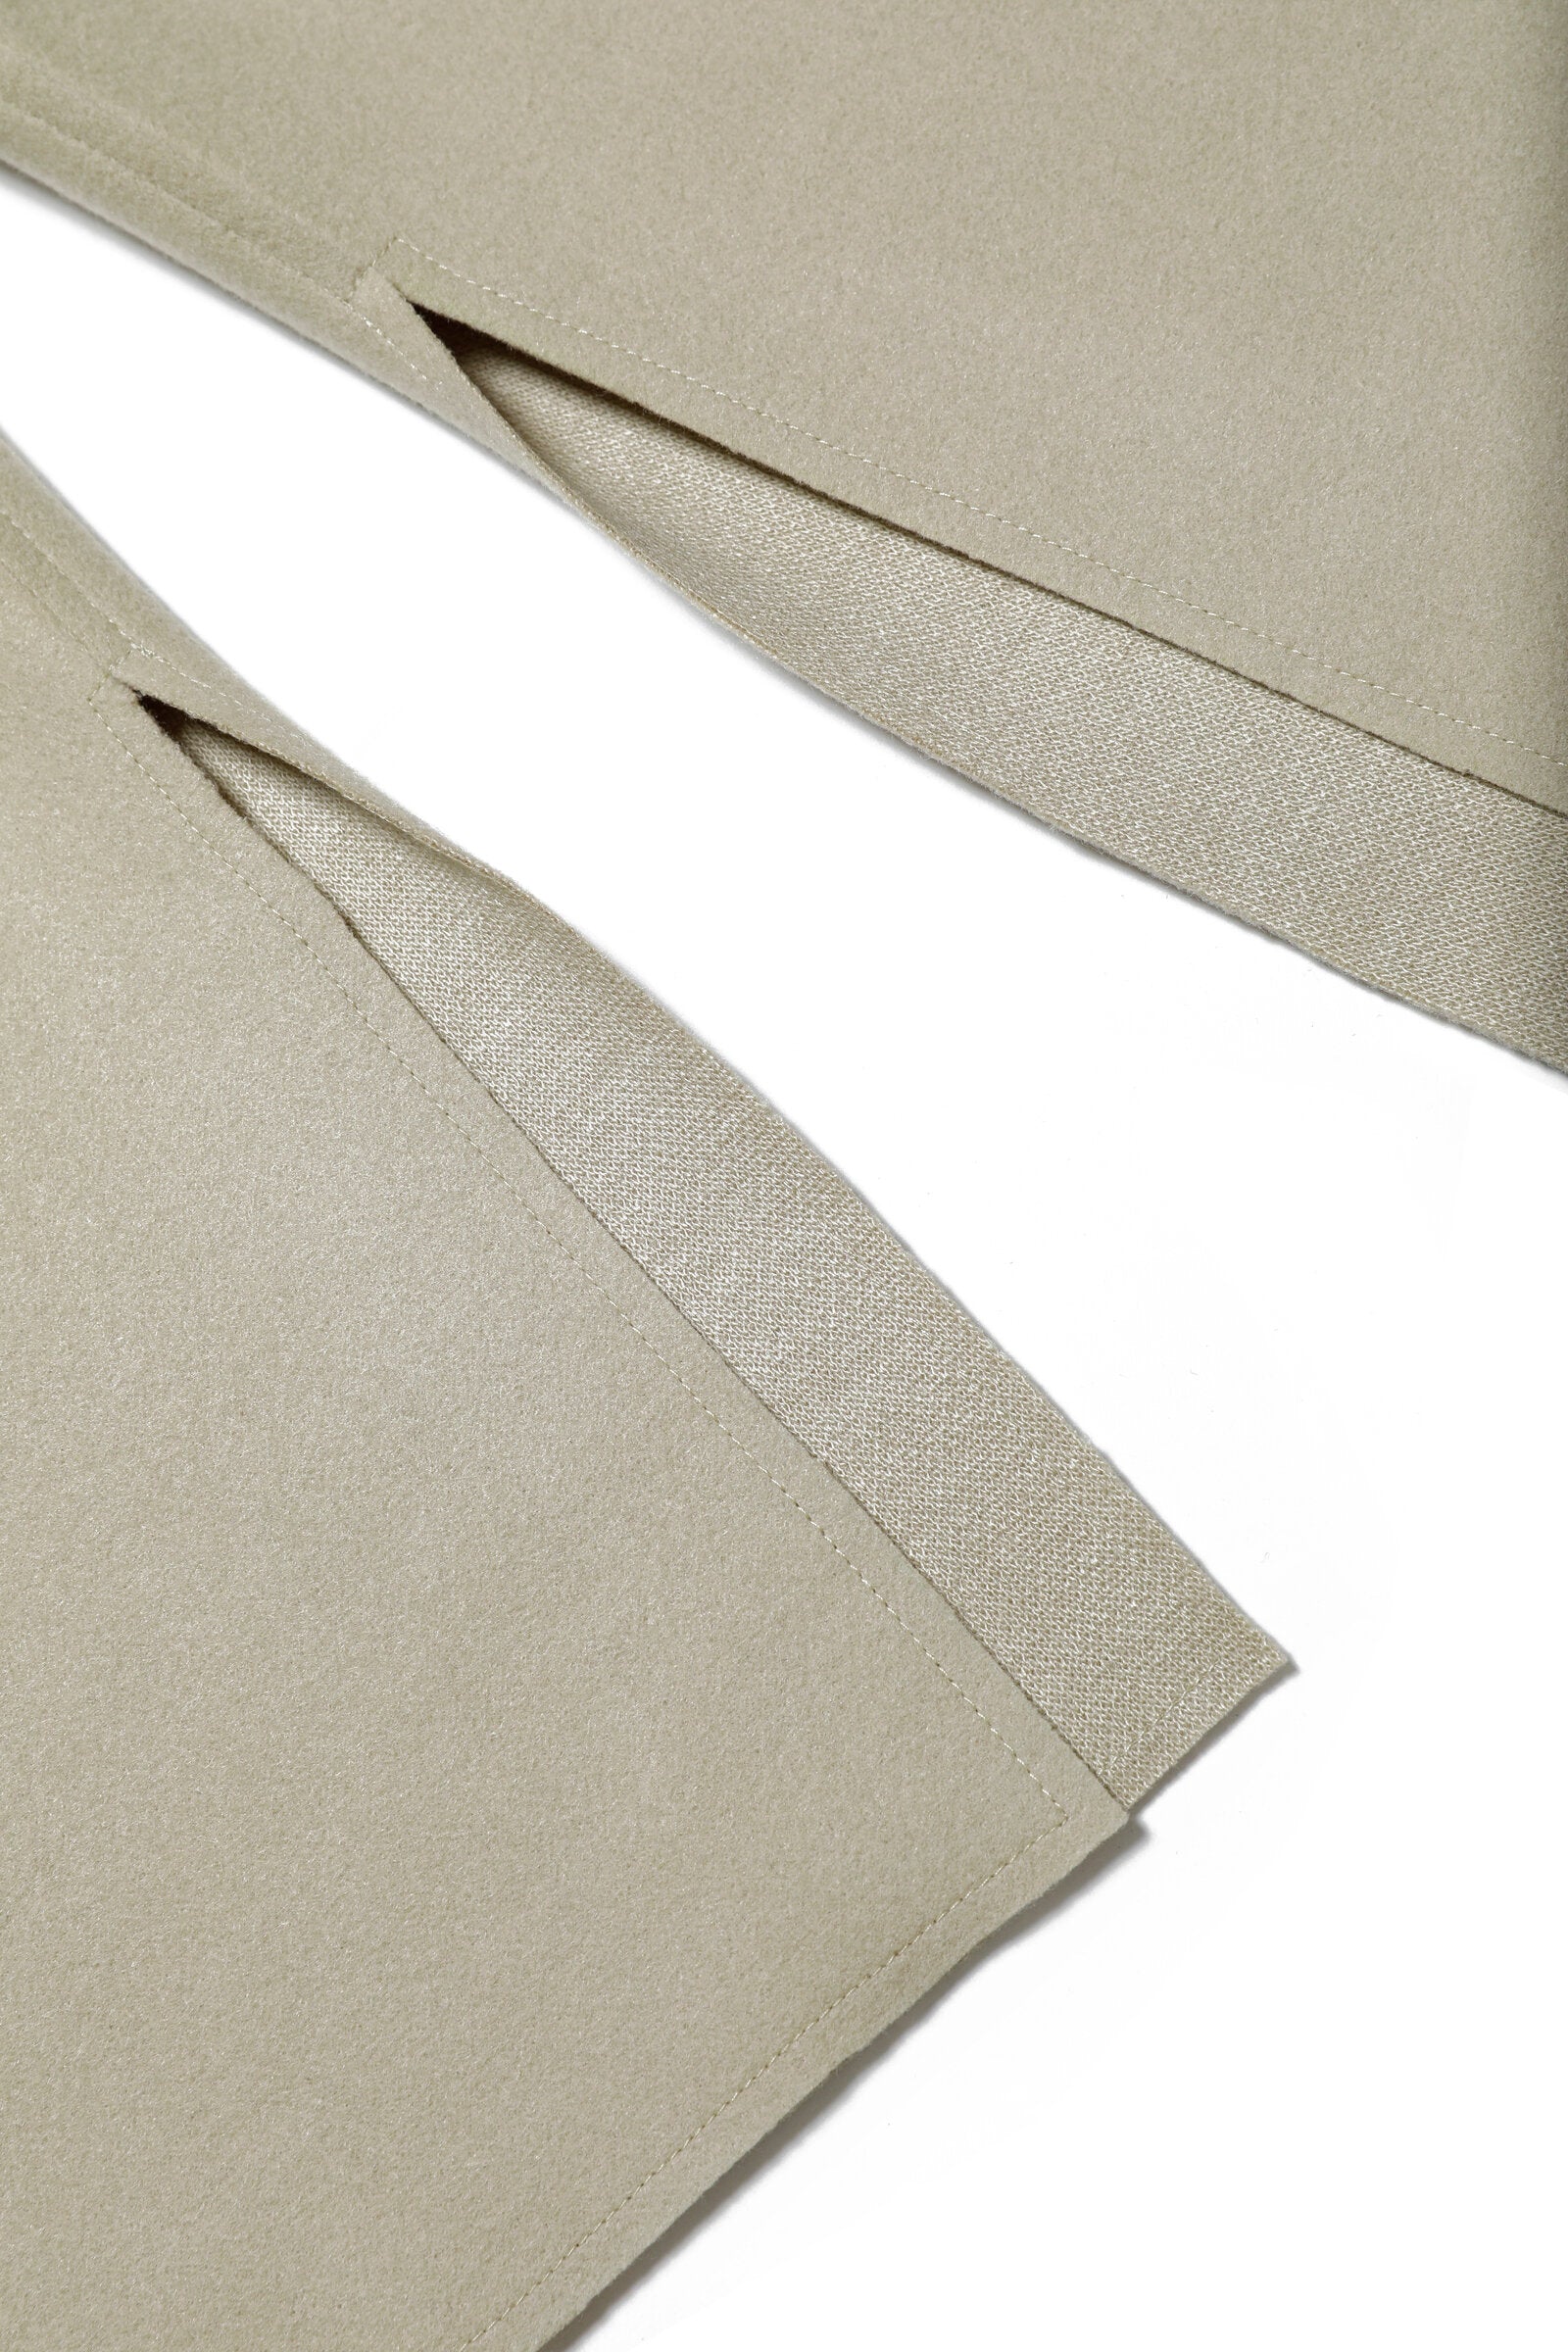 Cloth palazzo pants with raw-cut slits inside the bottom leg